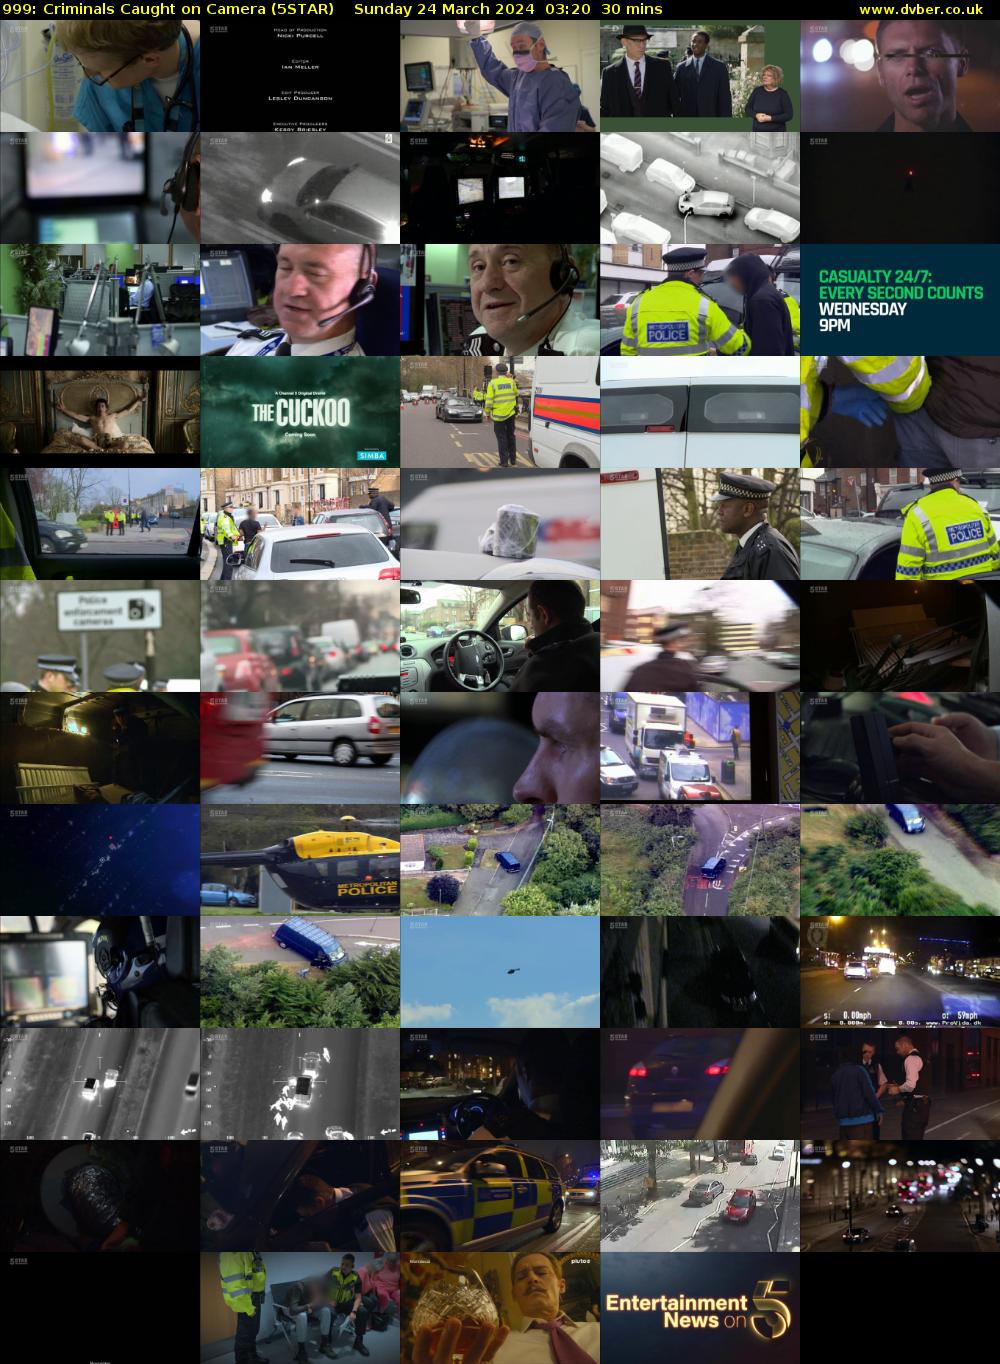 999: Criminals Caught on Camera (5STAR) Sunday 24 March 2024 03:20 - 03:50